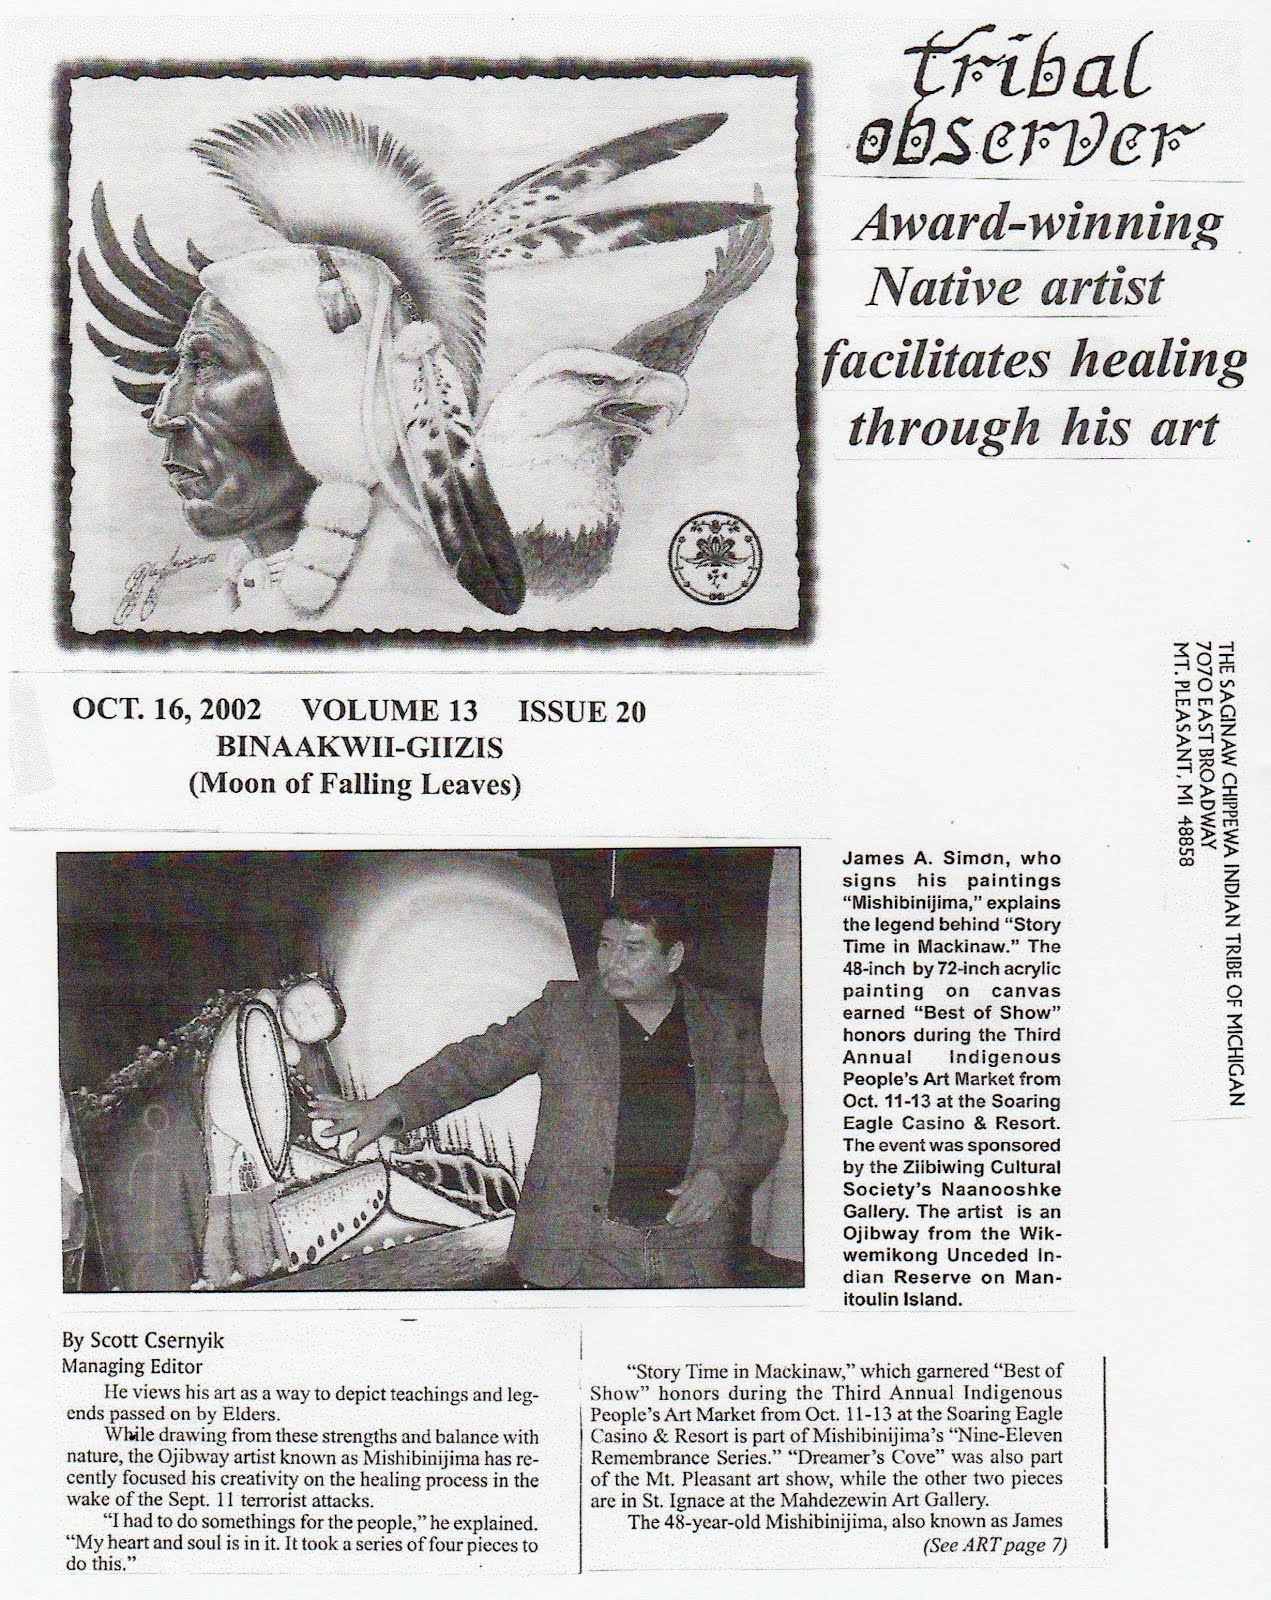 MICHIGAN ART JURY - 2002